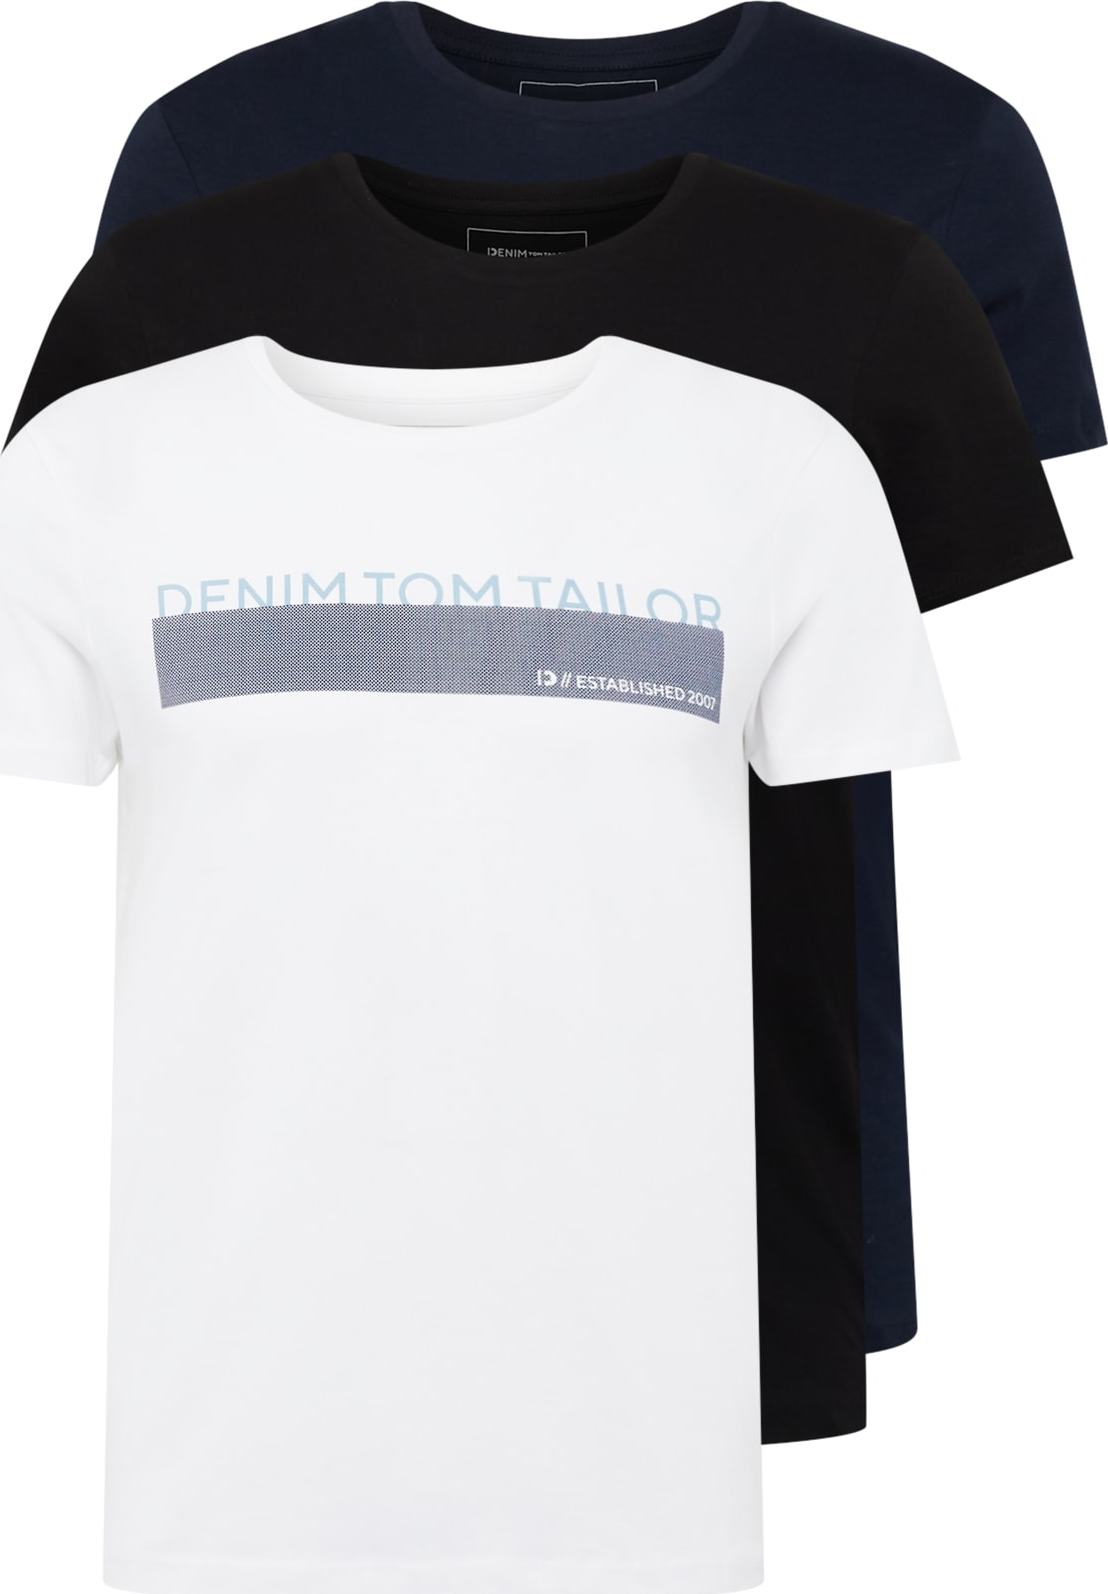 Tričko Tom Tailor Denim námořnická modř / světlemodrá / černá / bílá